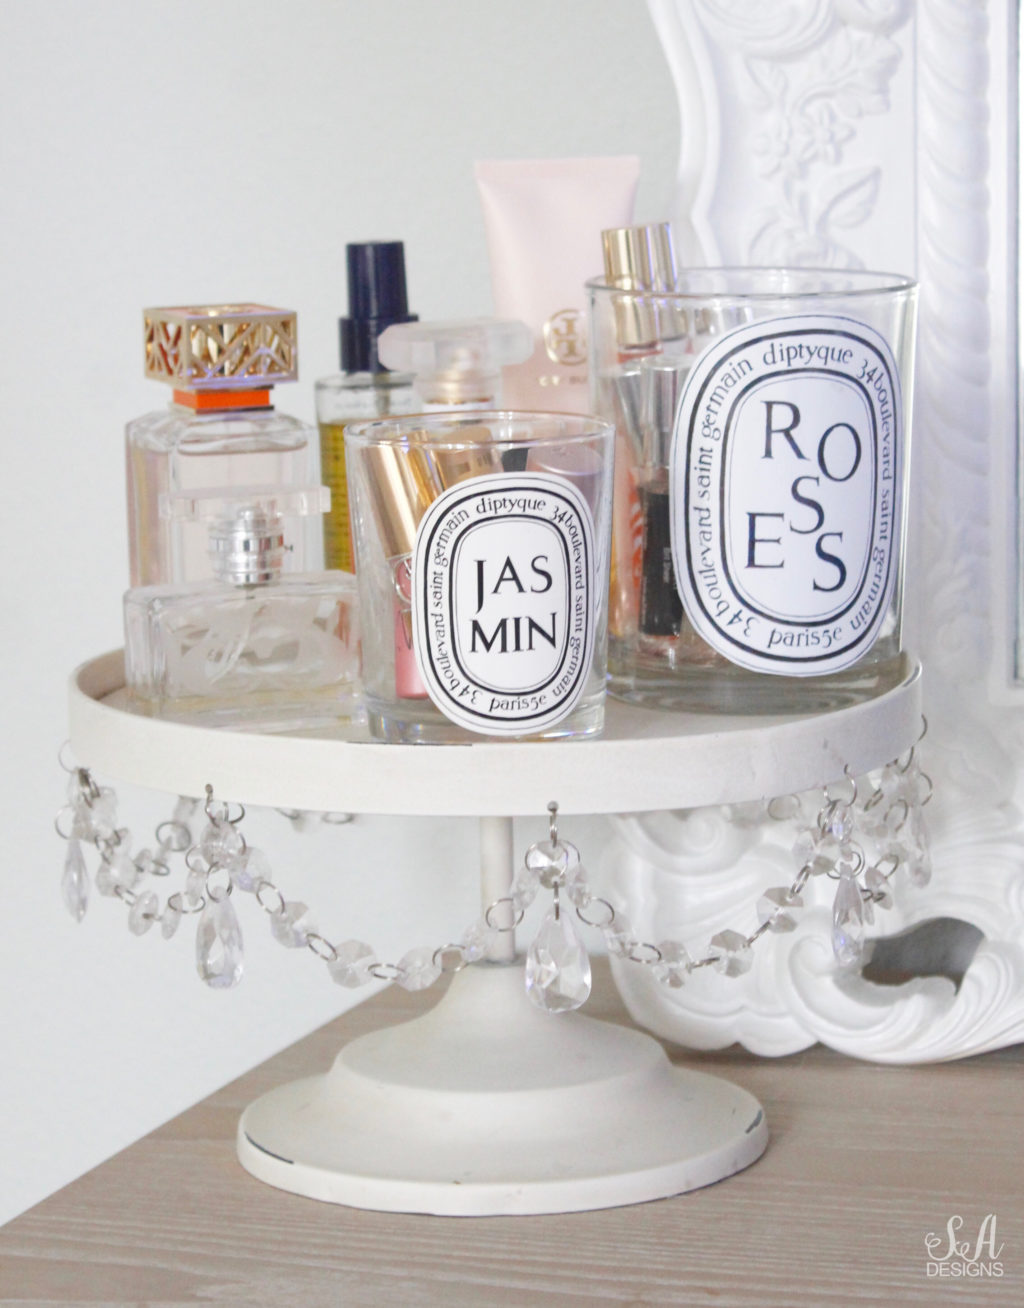 25 Creative Ways to Use Glass Jars for Decoration – BottleStore.com Blog